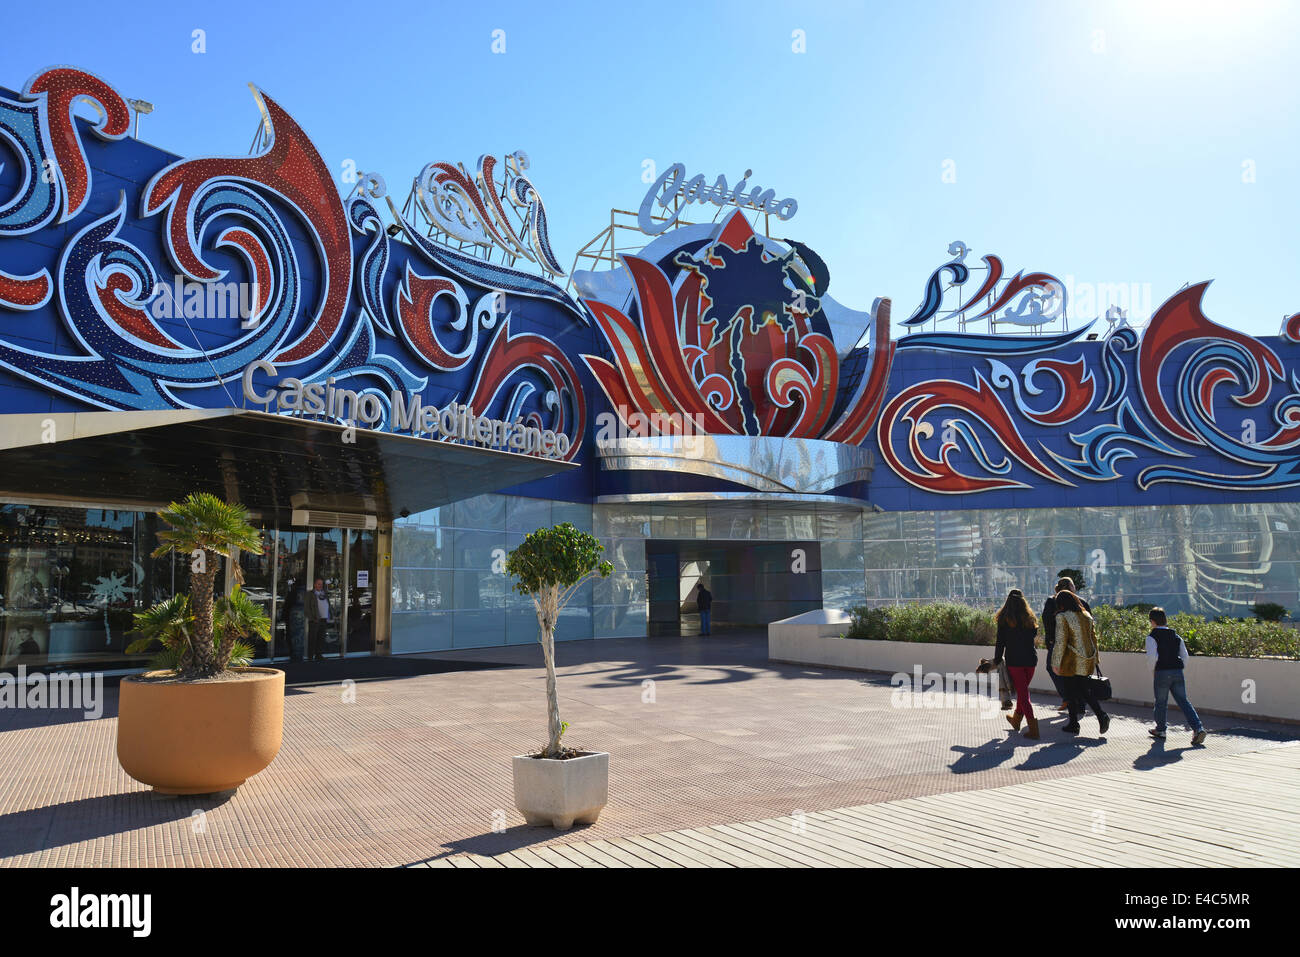 Entrance to Casino Mediterráneo Alicante, Alicante, Costa Blanca, Alicante Province, Kingdom of Spain Stock Photo